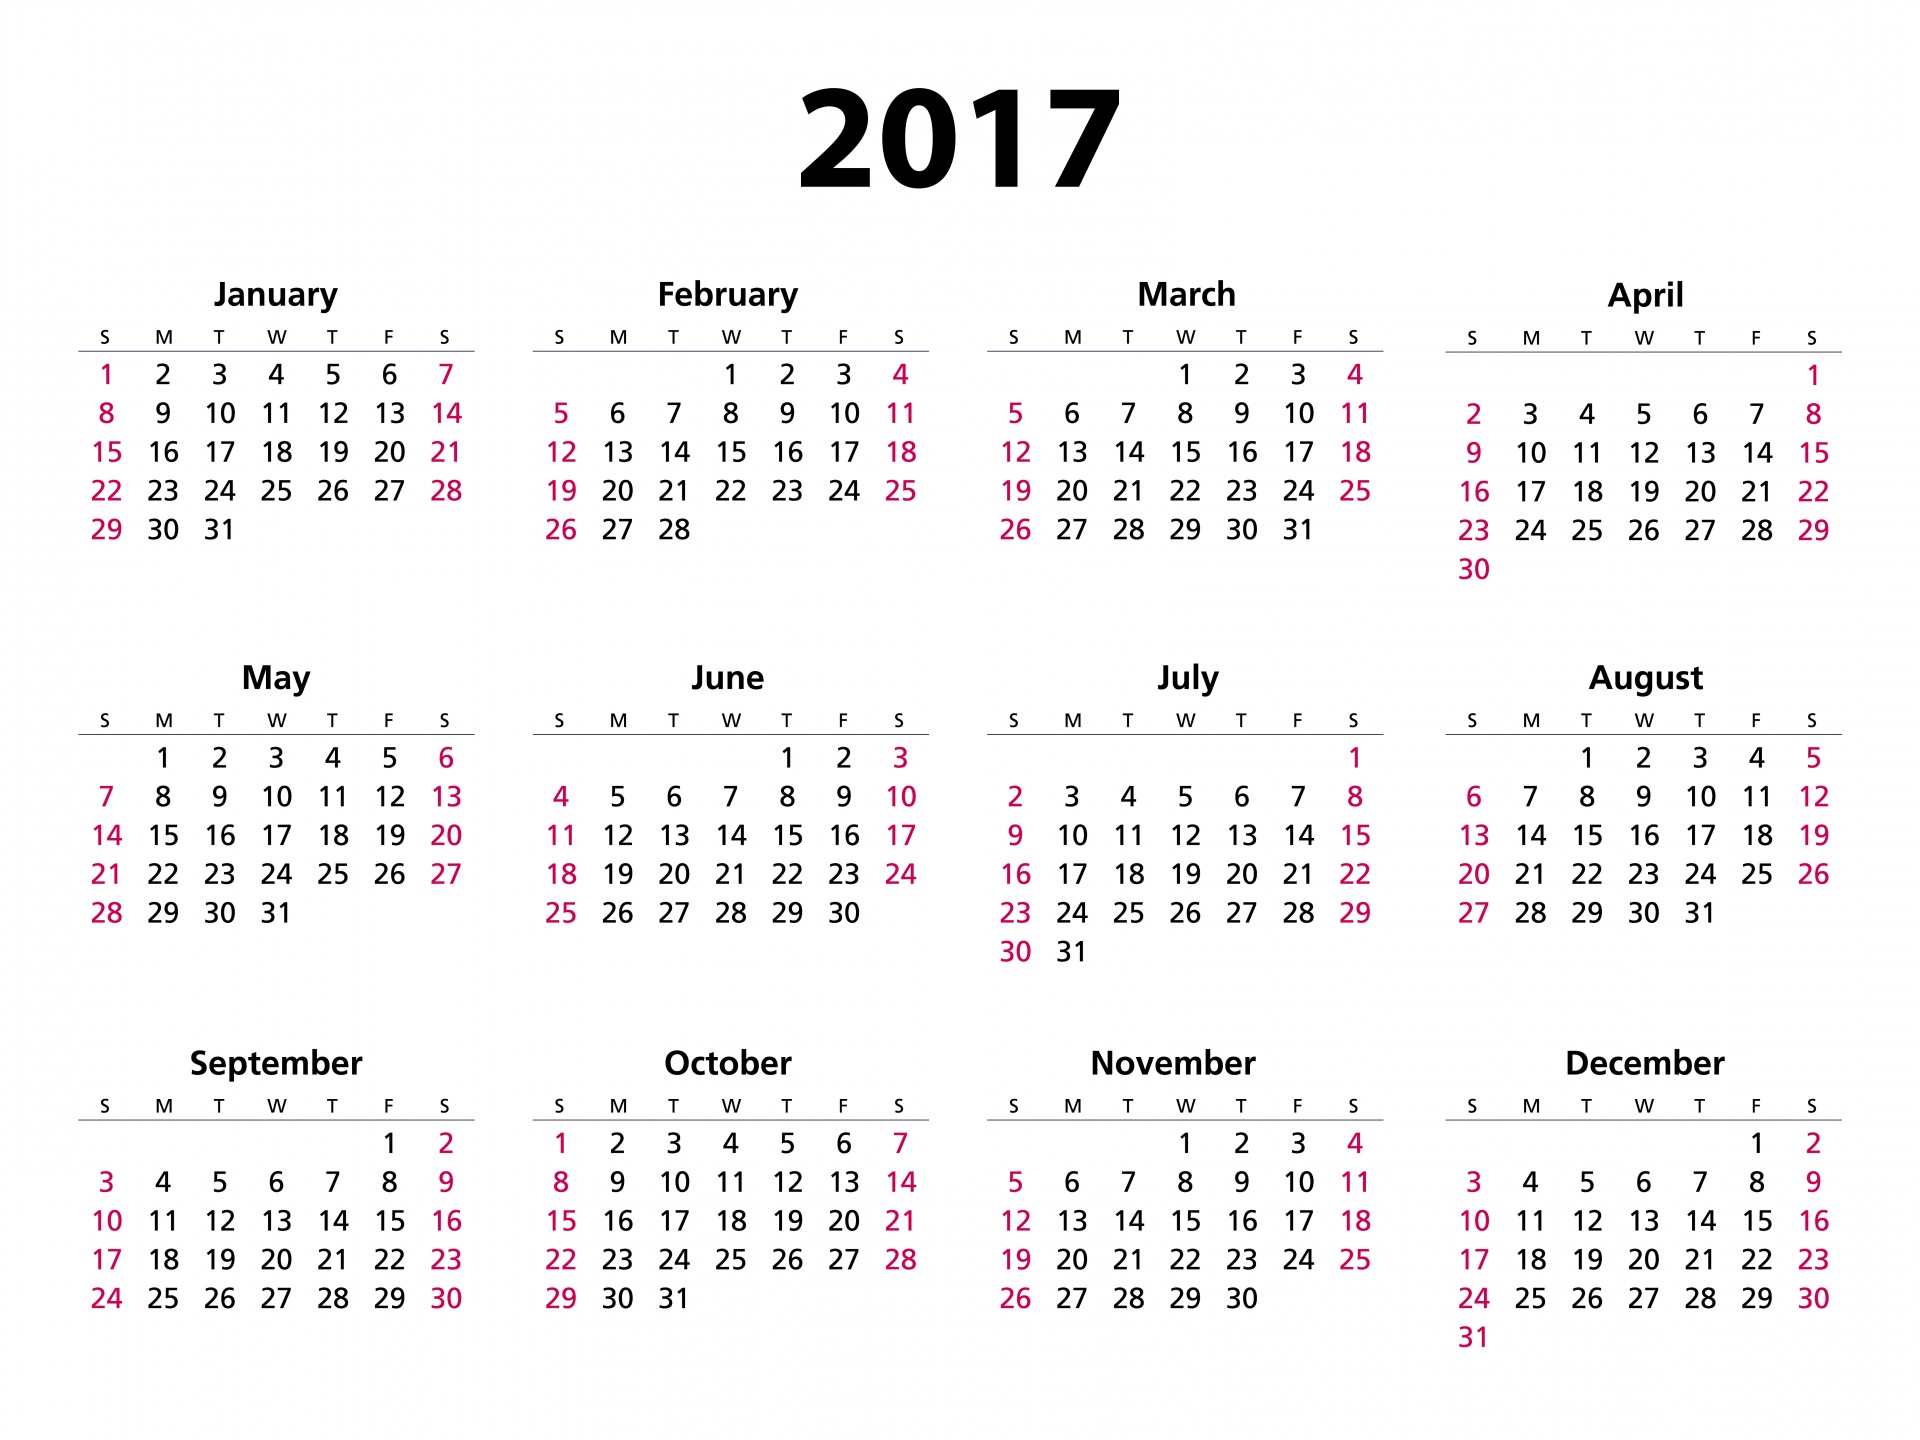 2017 Calendar | WikiDates.org